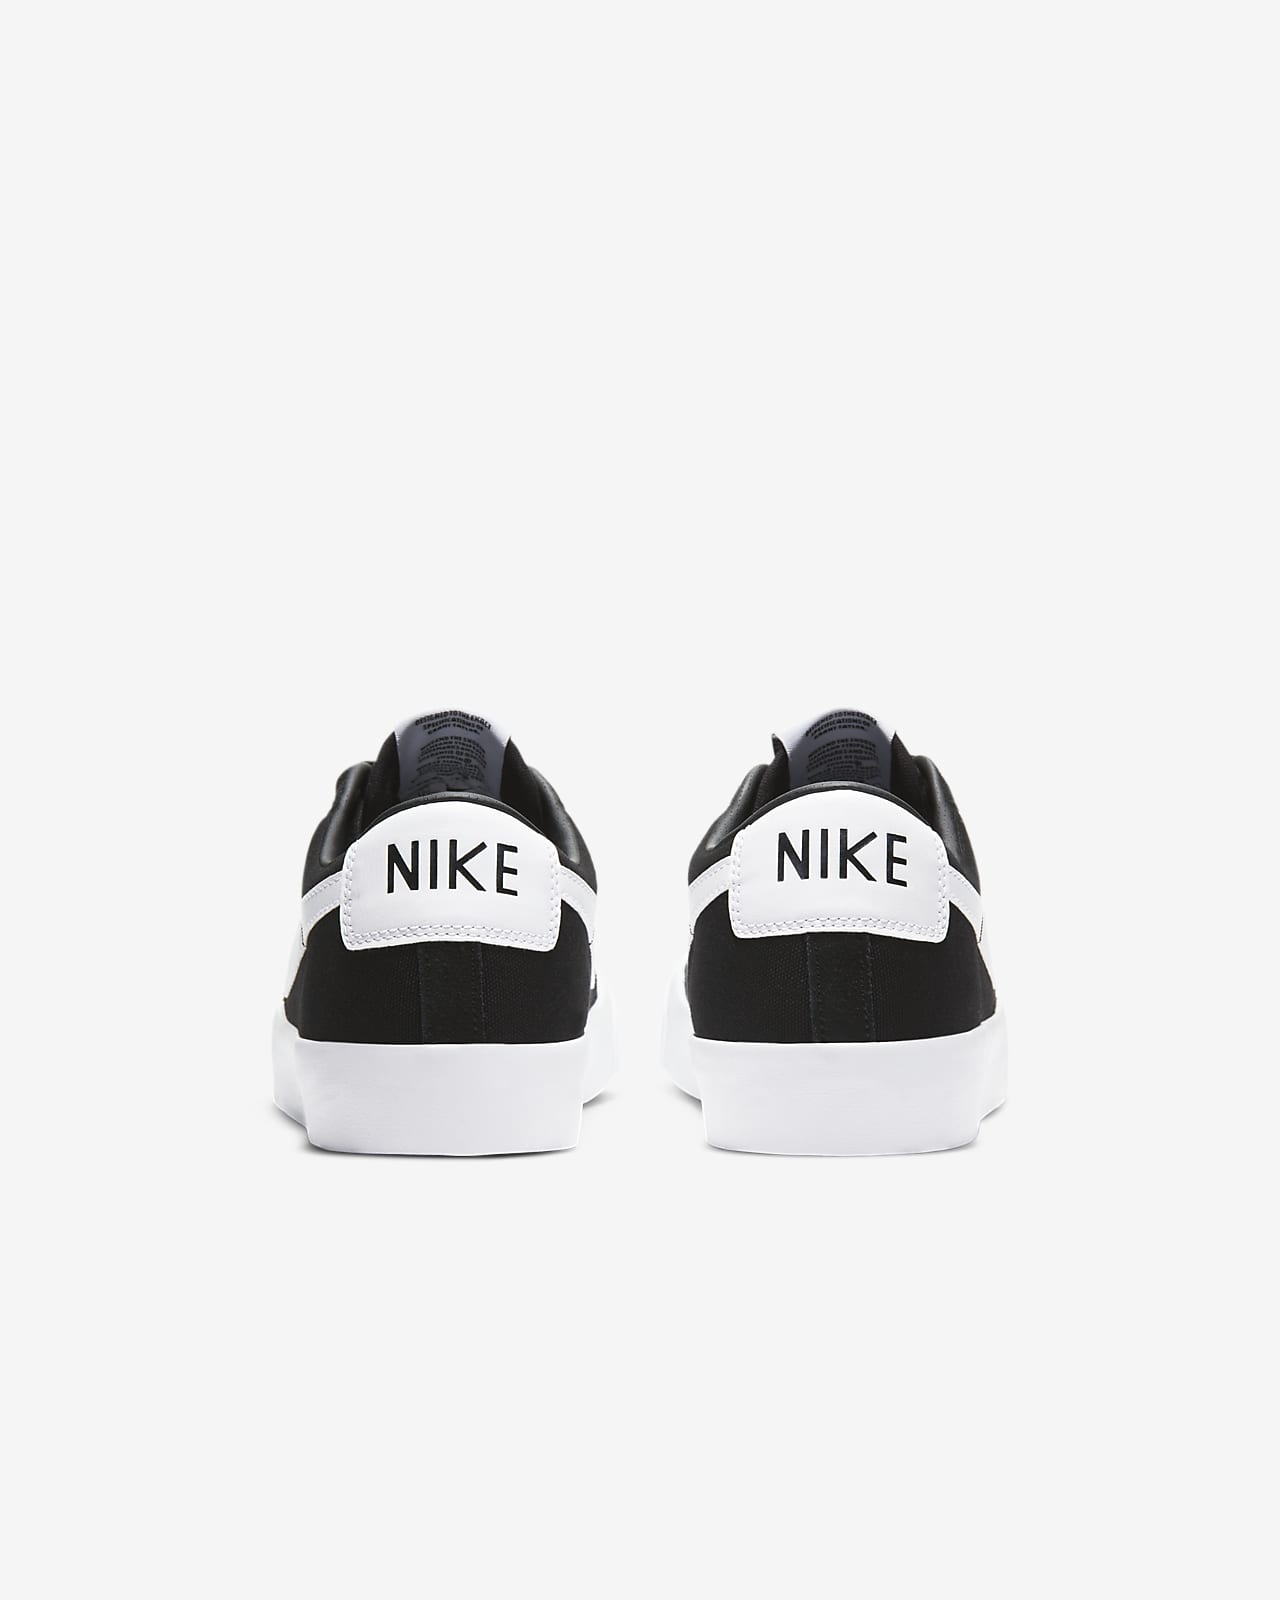 black and white nike skate shoes